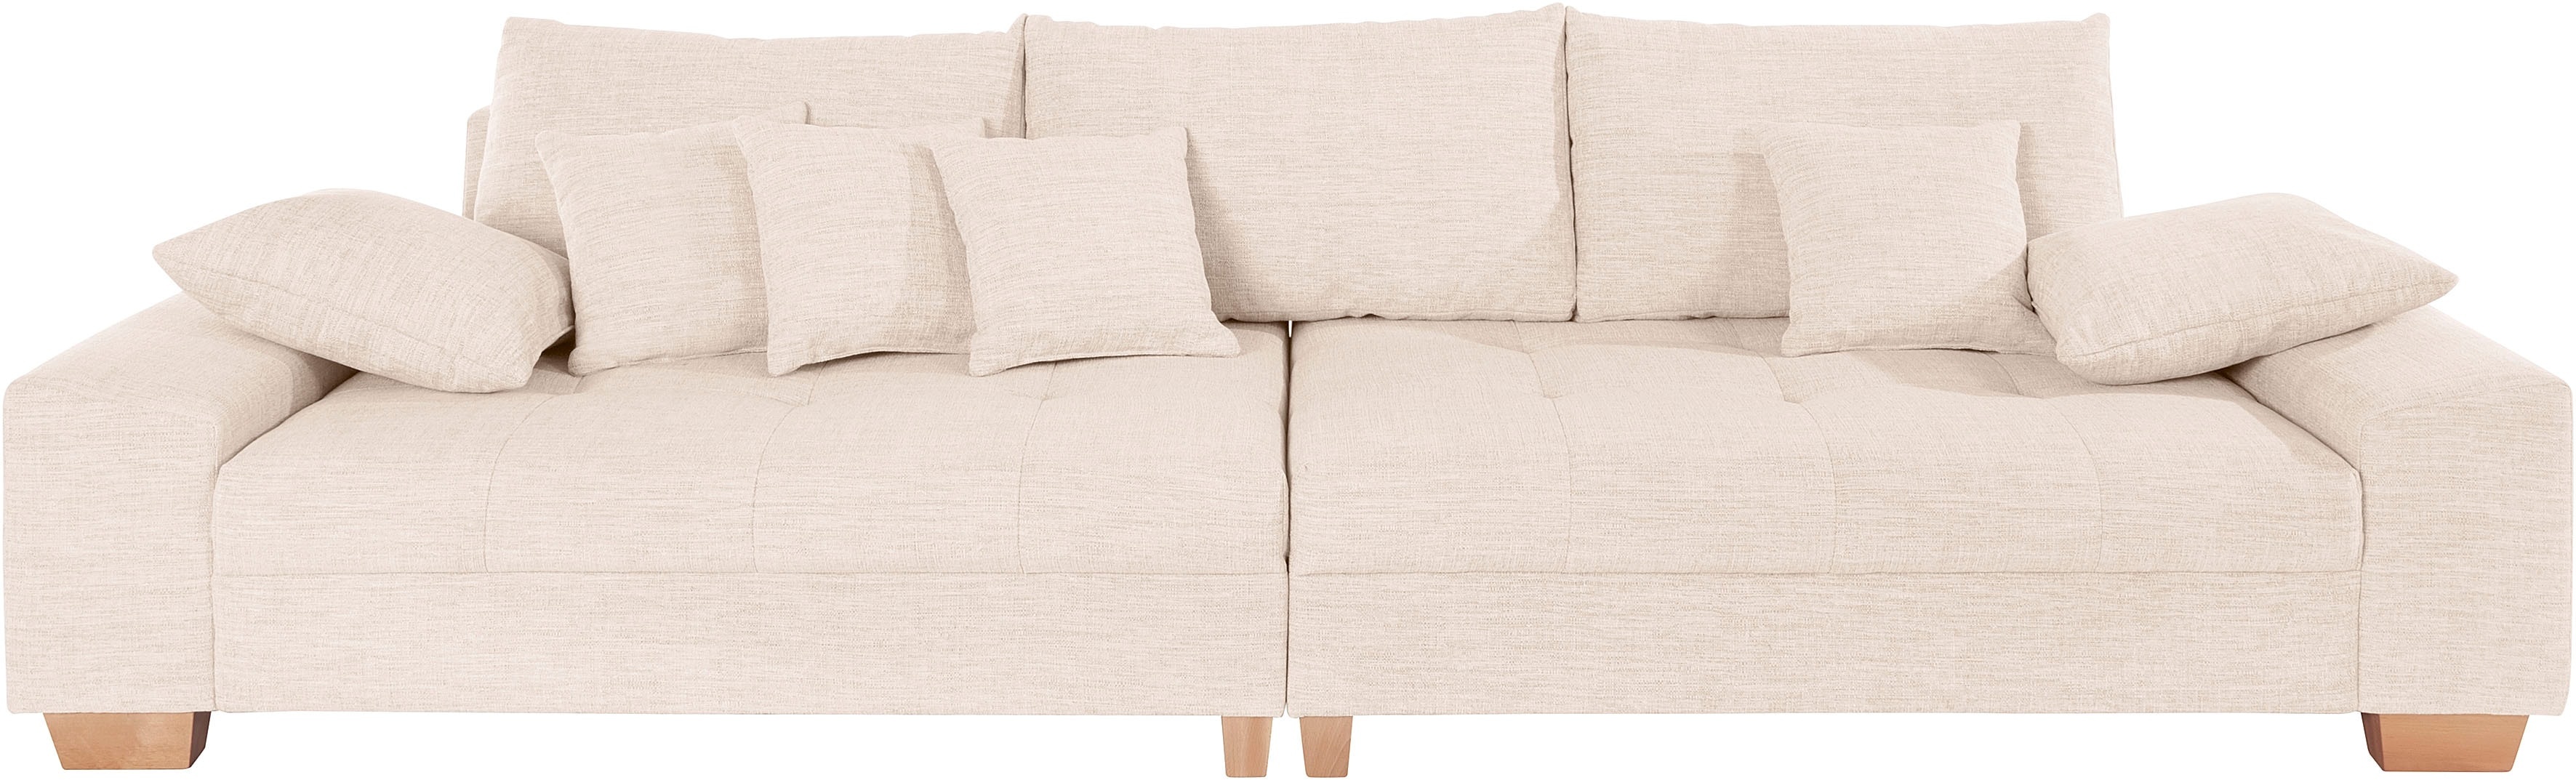 Mr. Couch Big-Sofa »Nikita« Mr. Couch natur